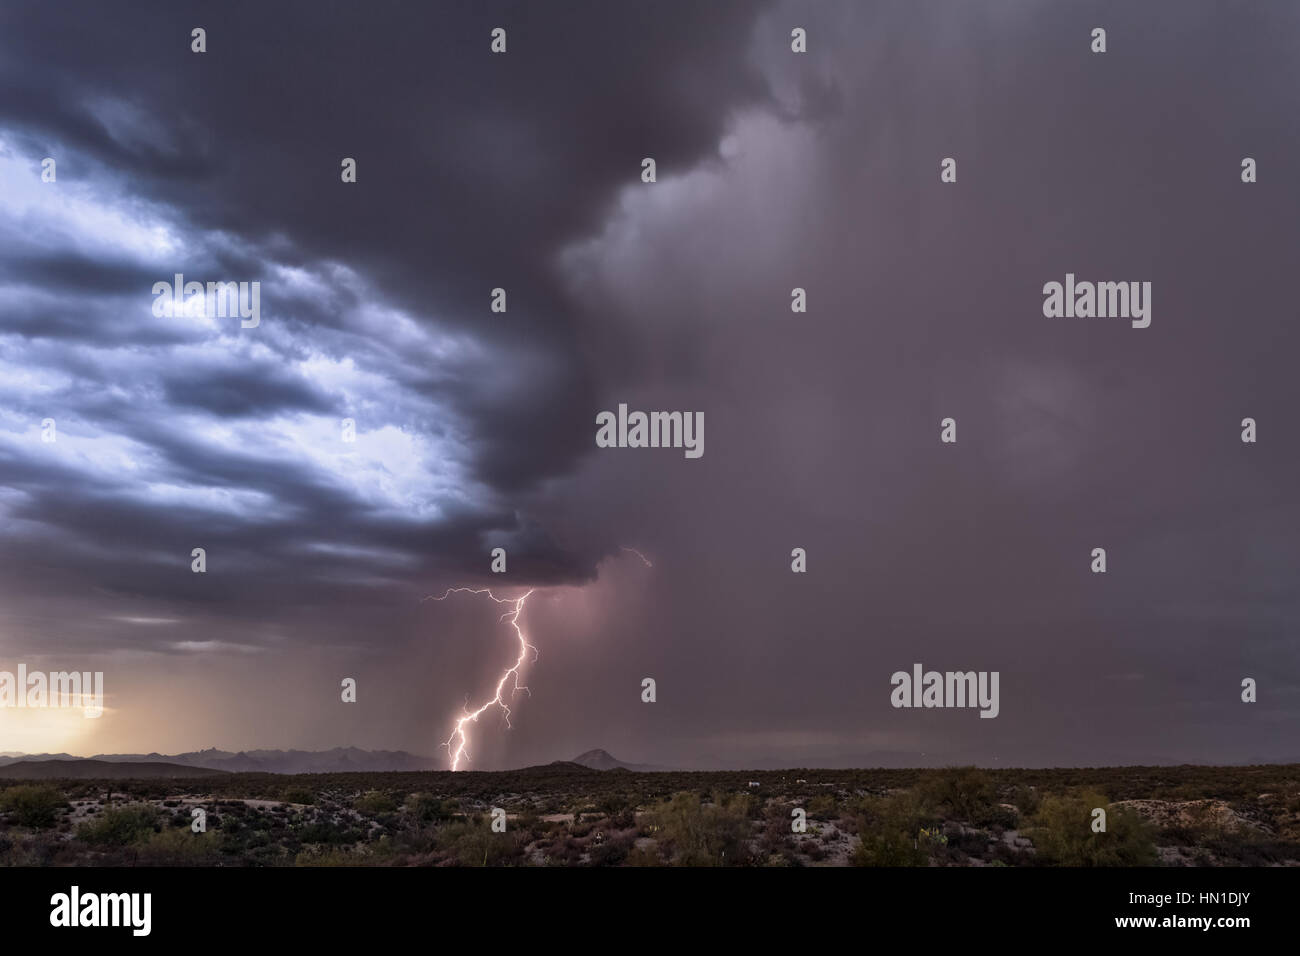 Summer thunderstorm with lightning and rain in the Arizona desert Stock Photo